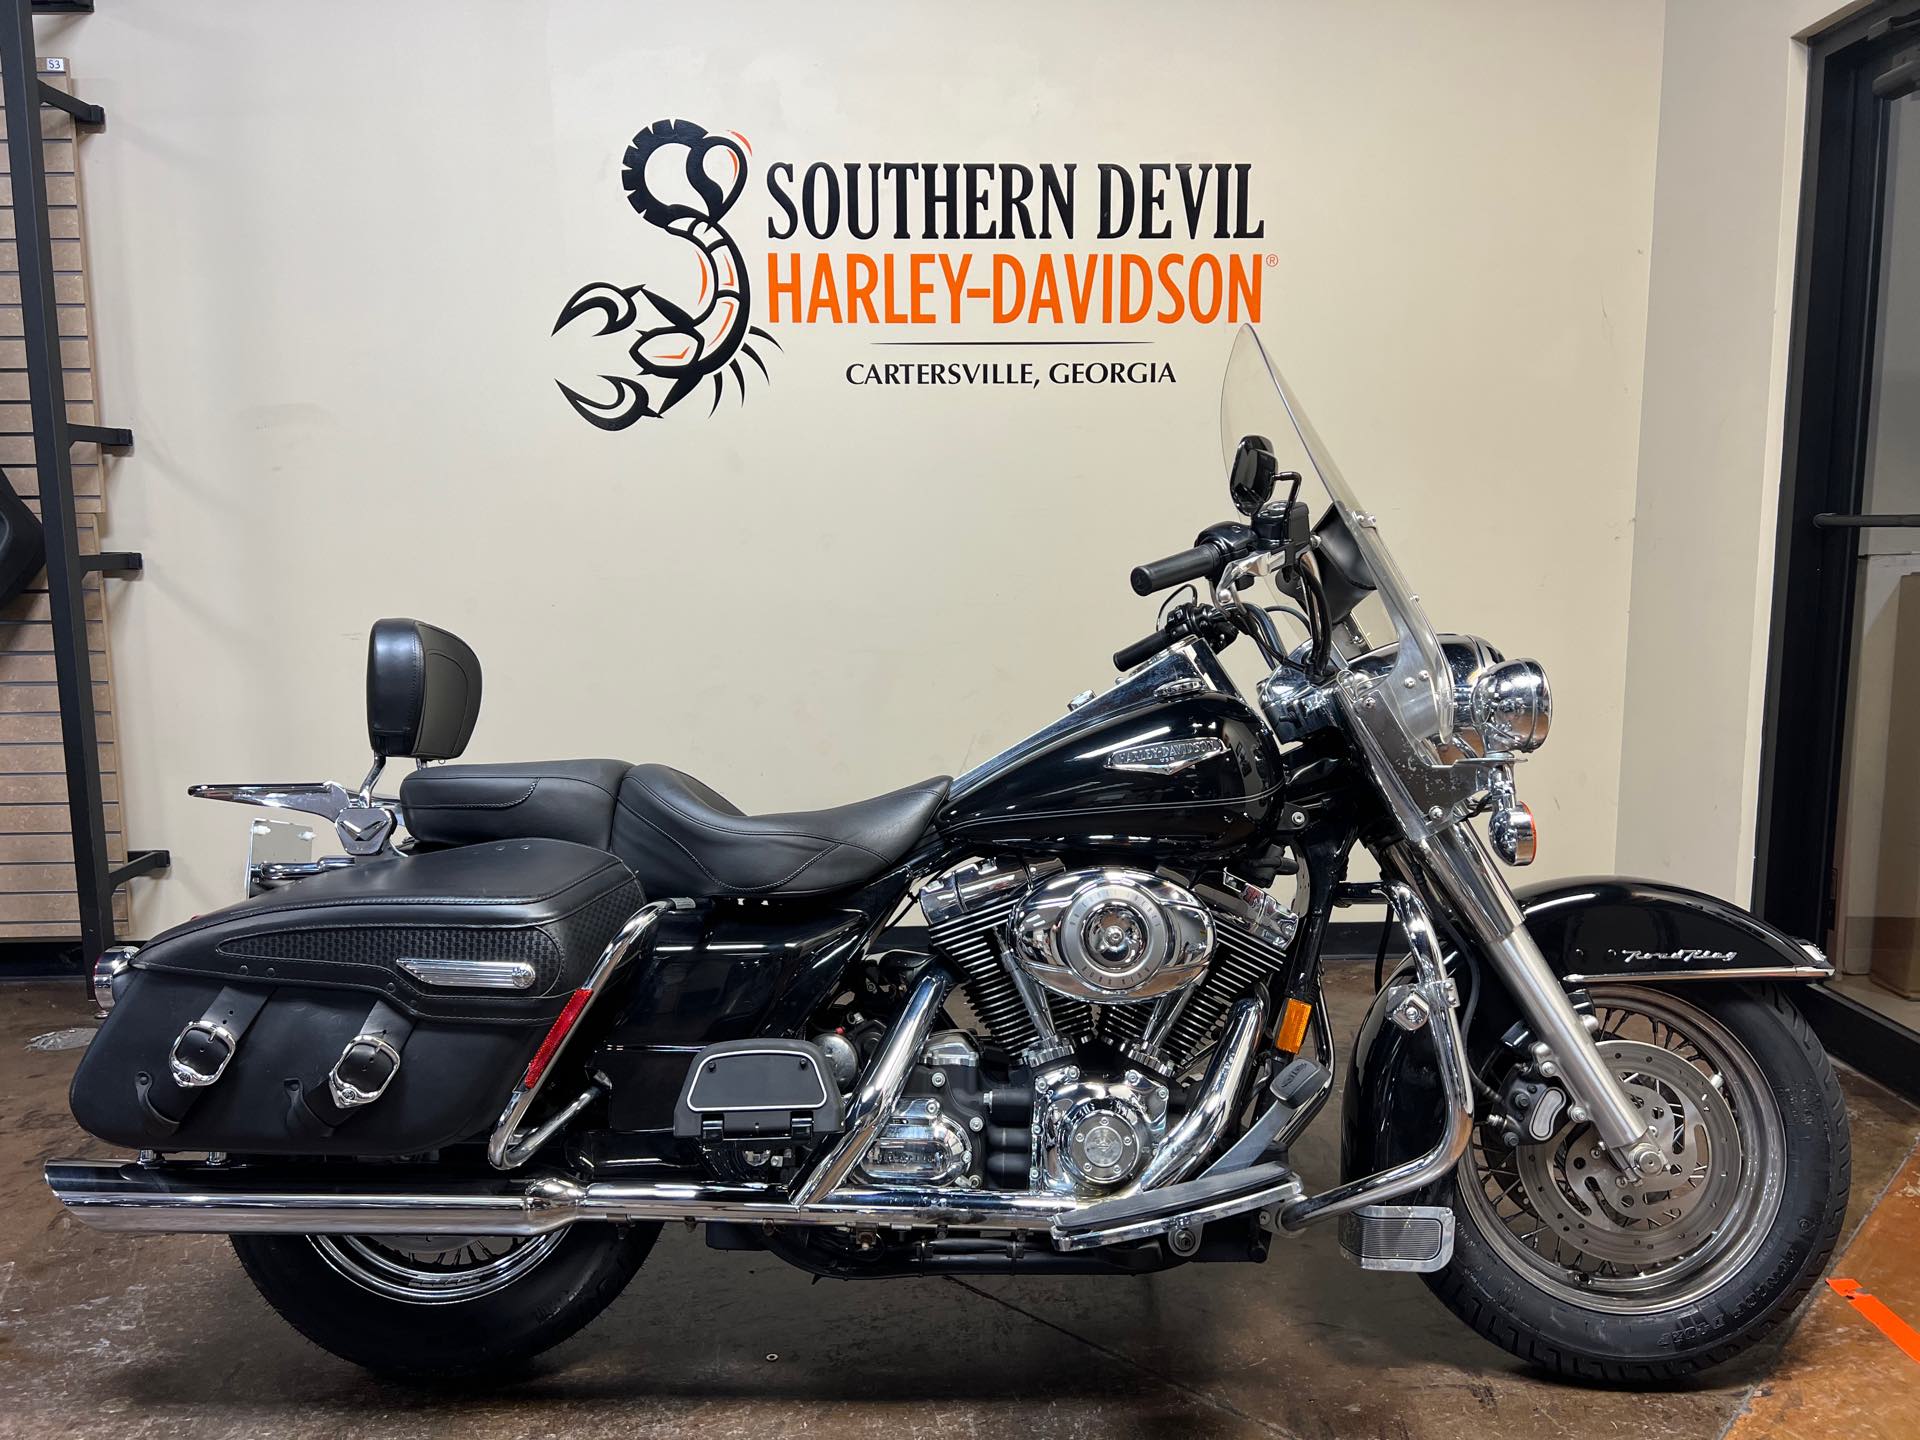 2007 Harley-Davidson Road King Classic at Southern Devil Harley-Davidson